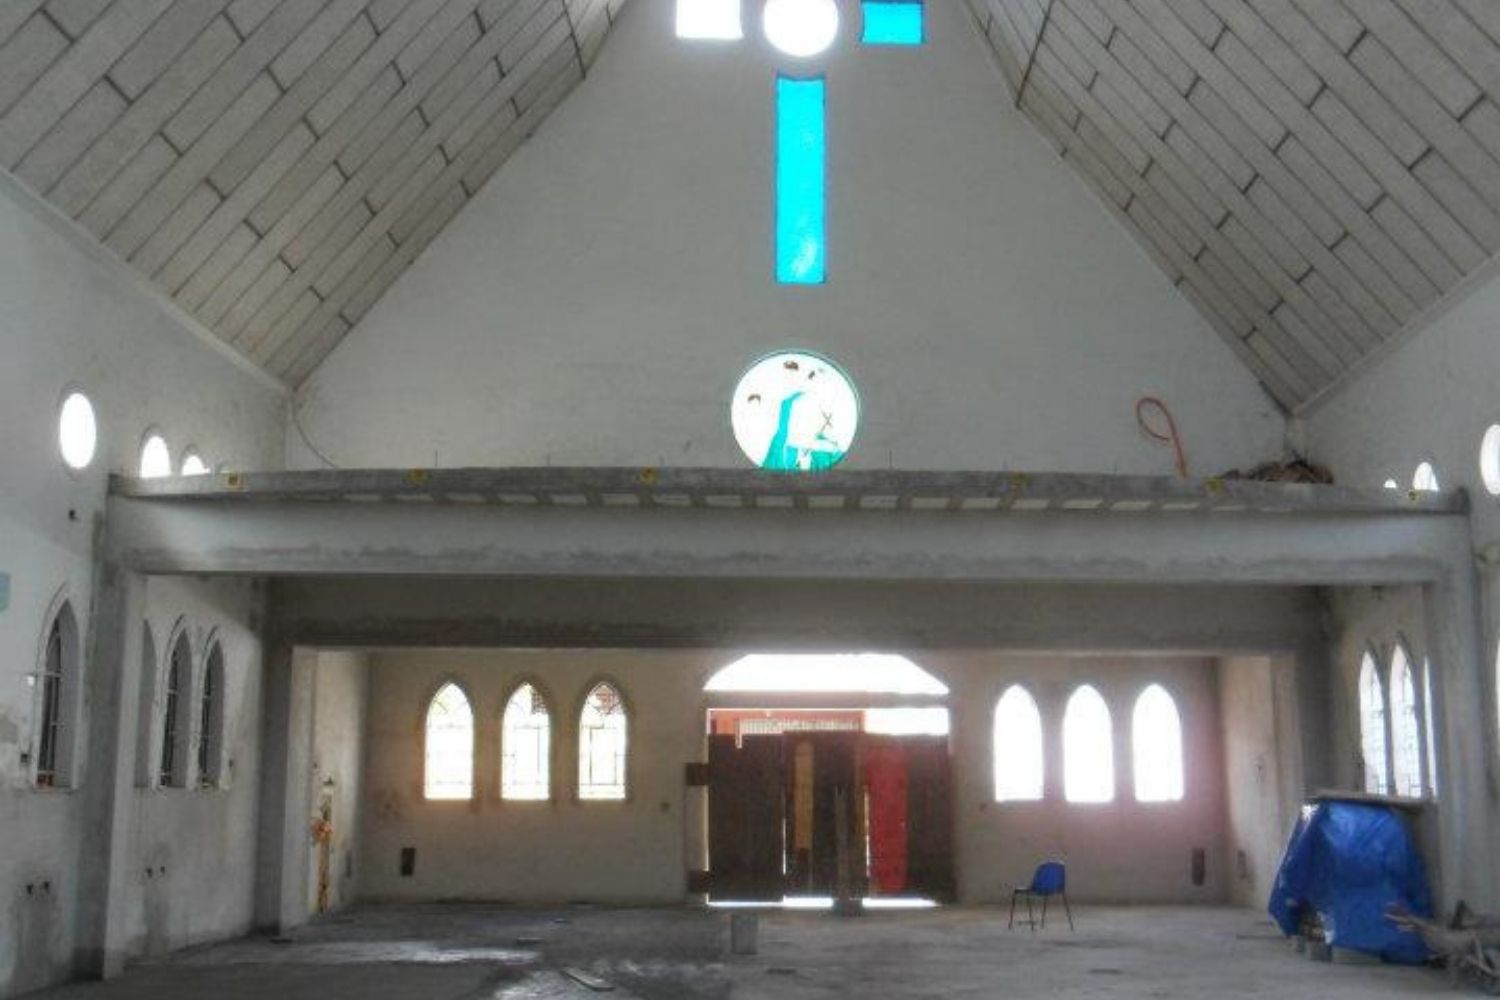 Reforma interna da igreja em 2012